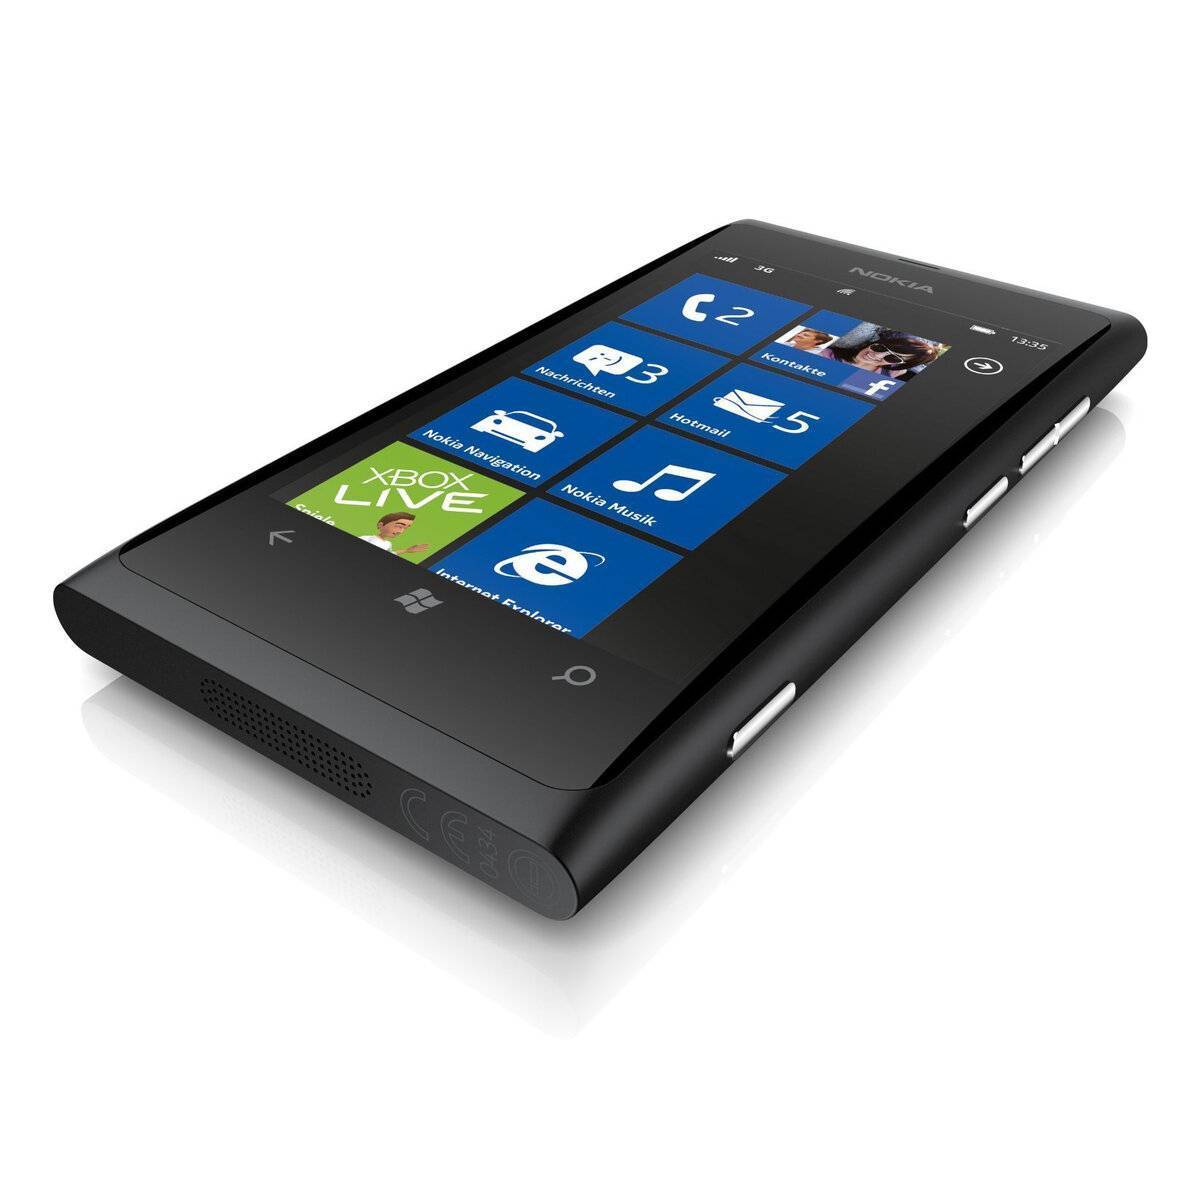 Nokia lumia 800 — описание, характеристики, фото, видео, отзывы